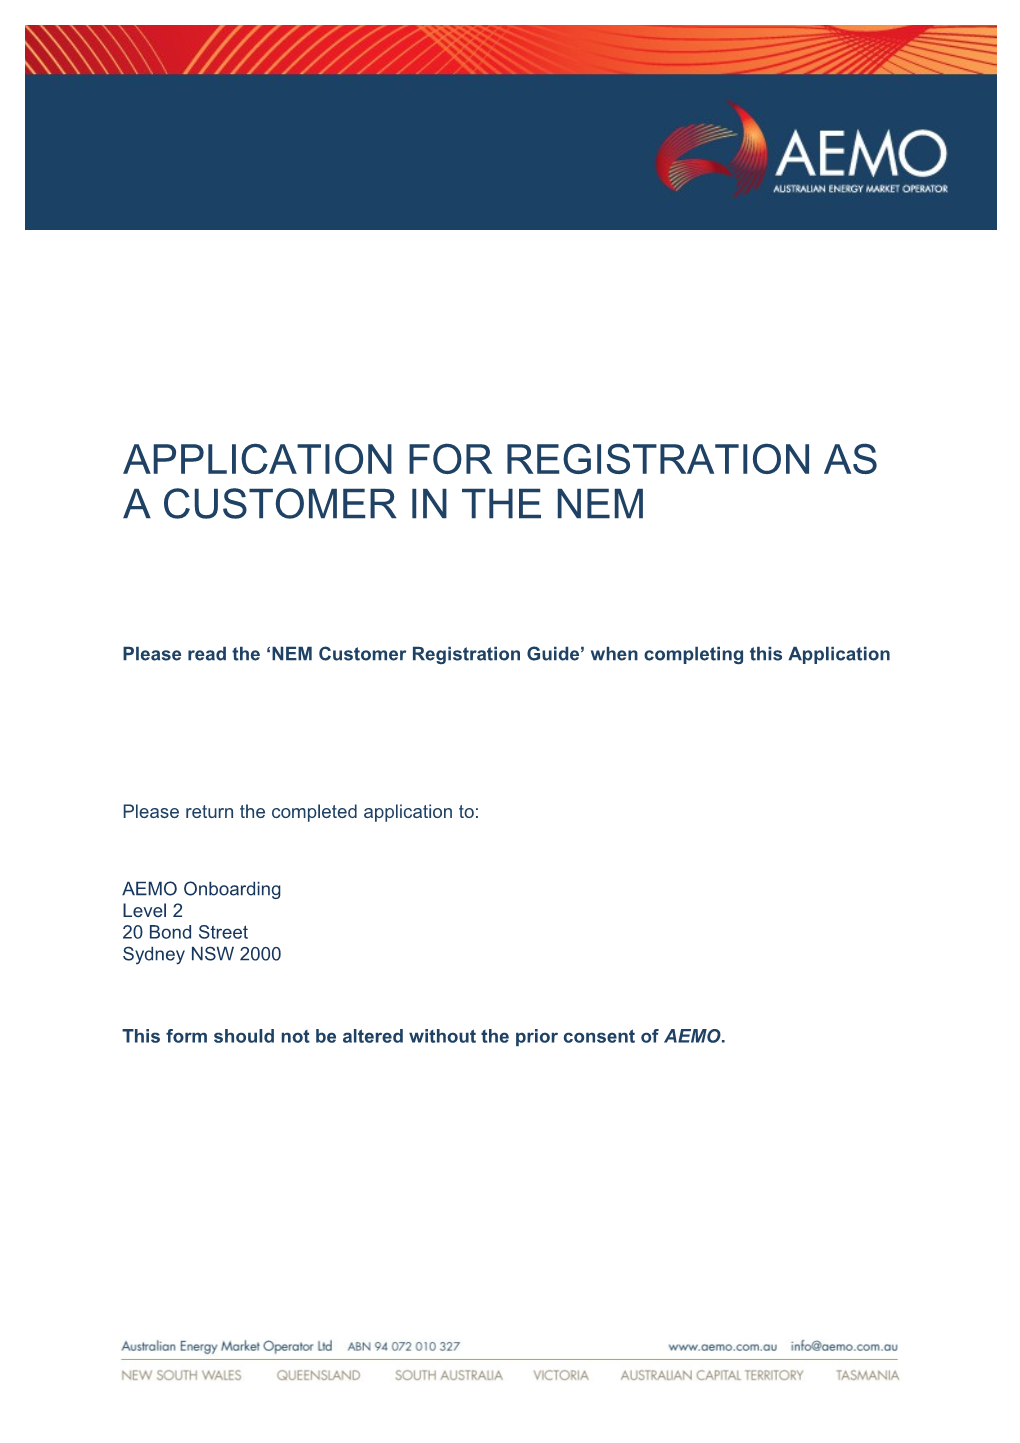 Application for Registration As a Customer in the NEM